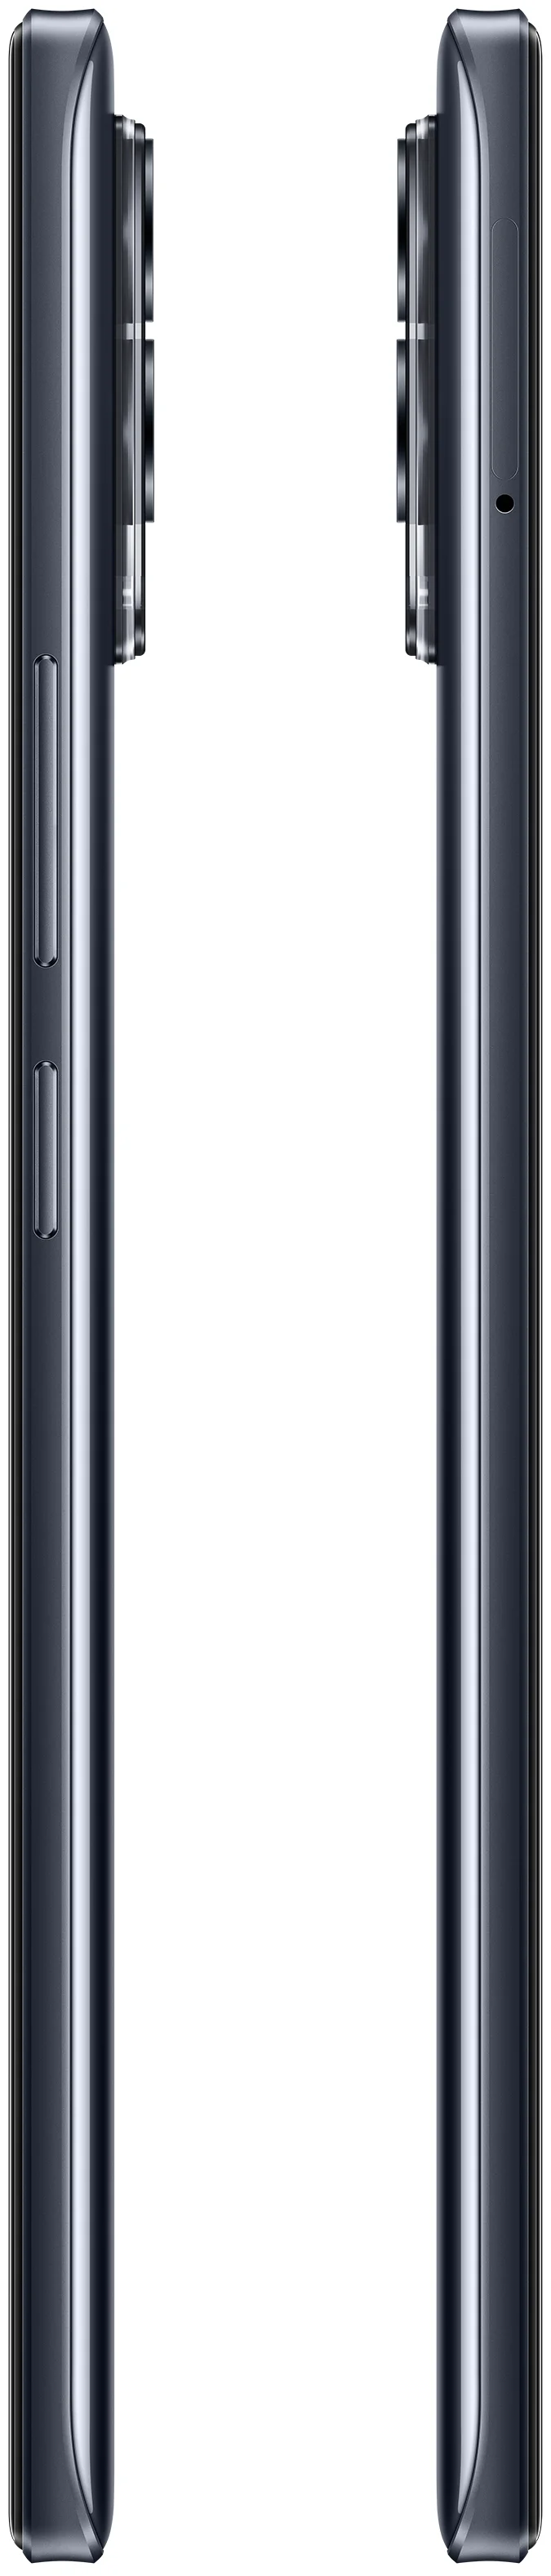 Realme 8 6/128GB - SIM-карты: 2 (nano SIM)